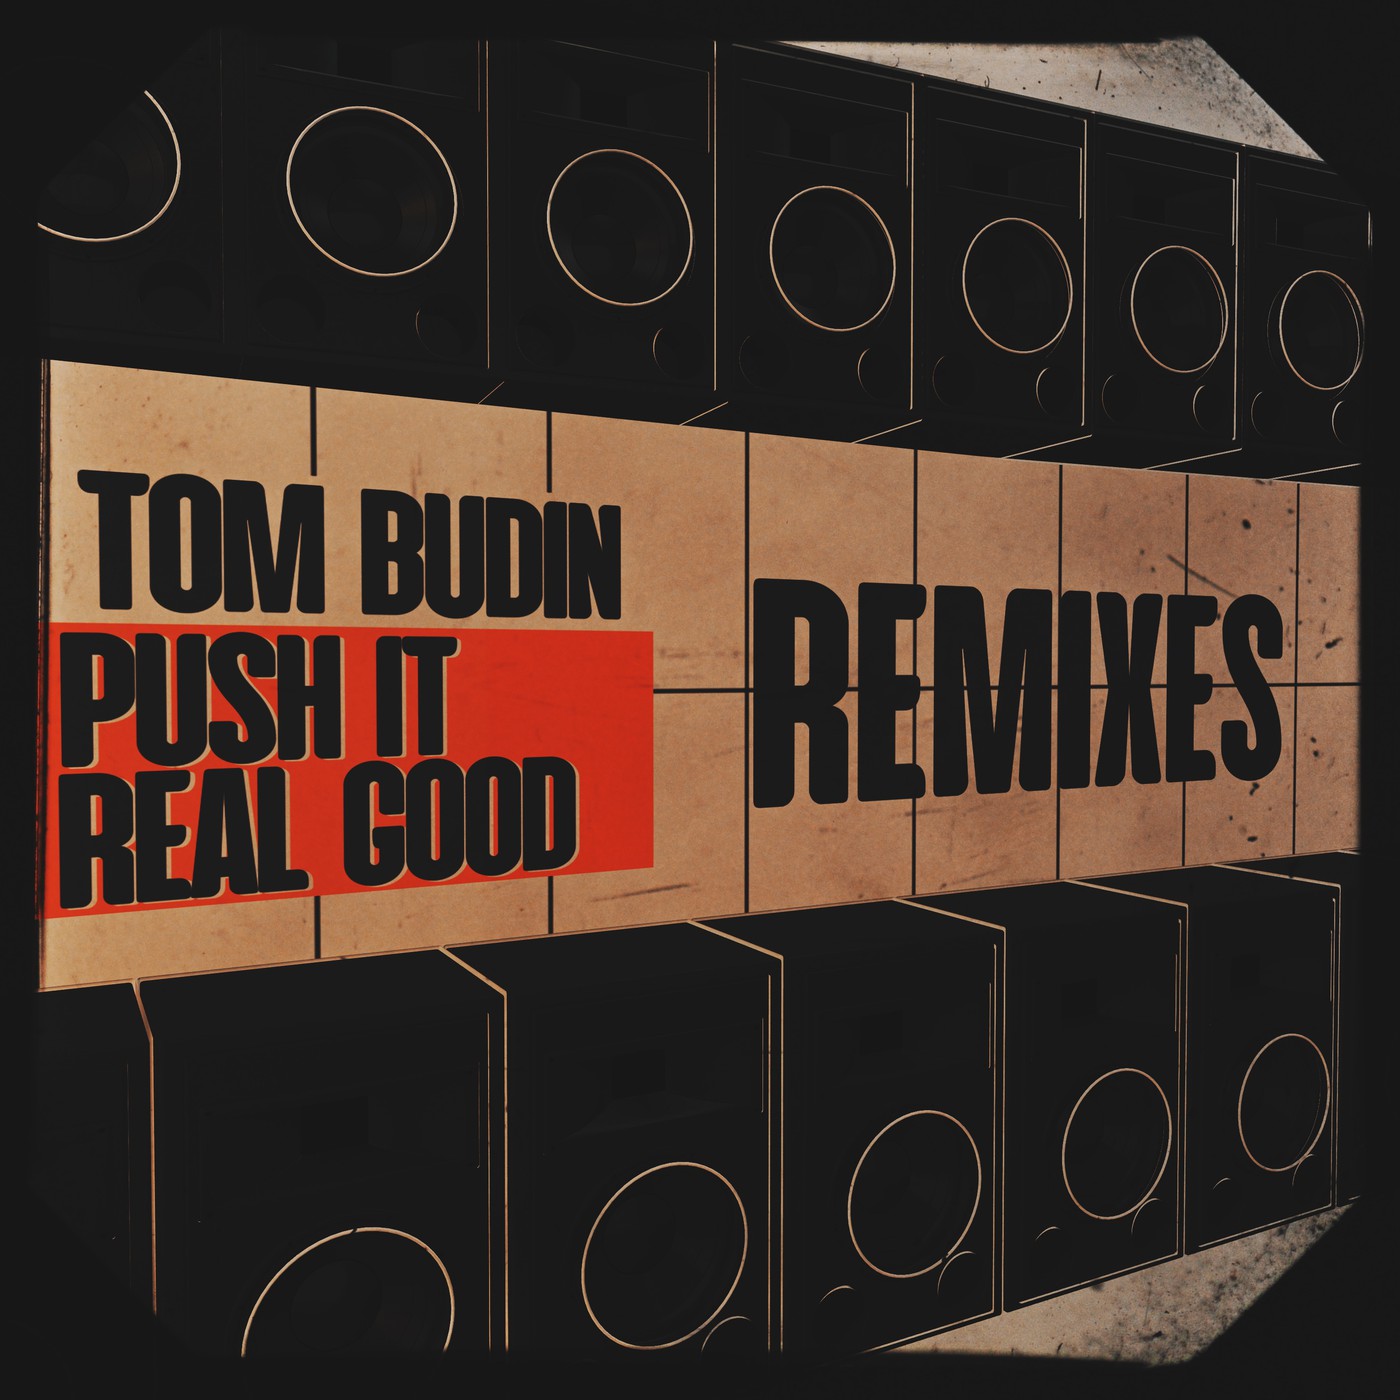 Tom Budin - Push It Real Good (Debris & JOS Remix)